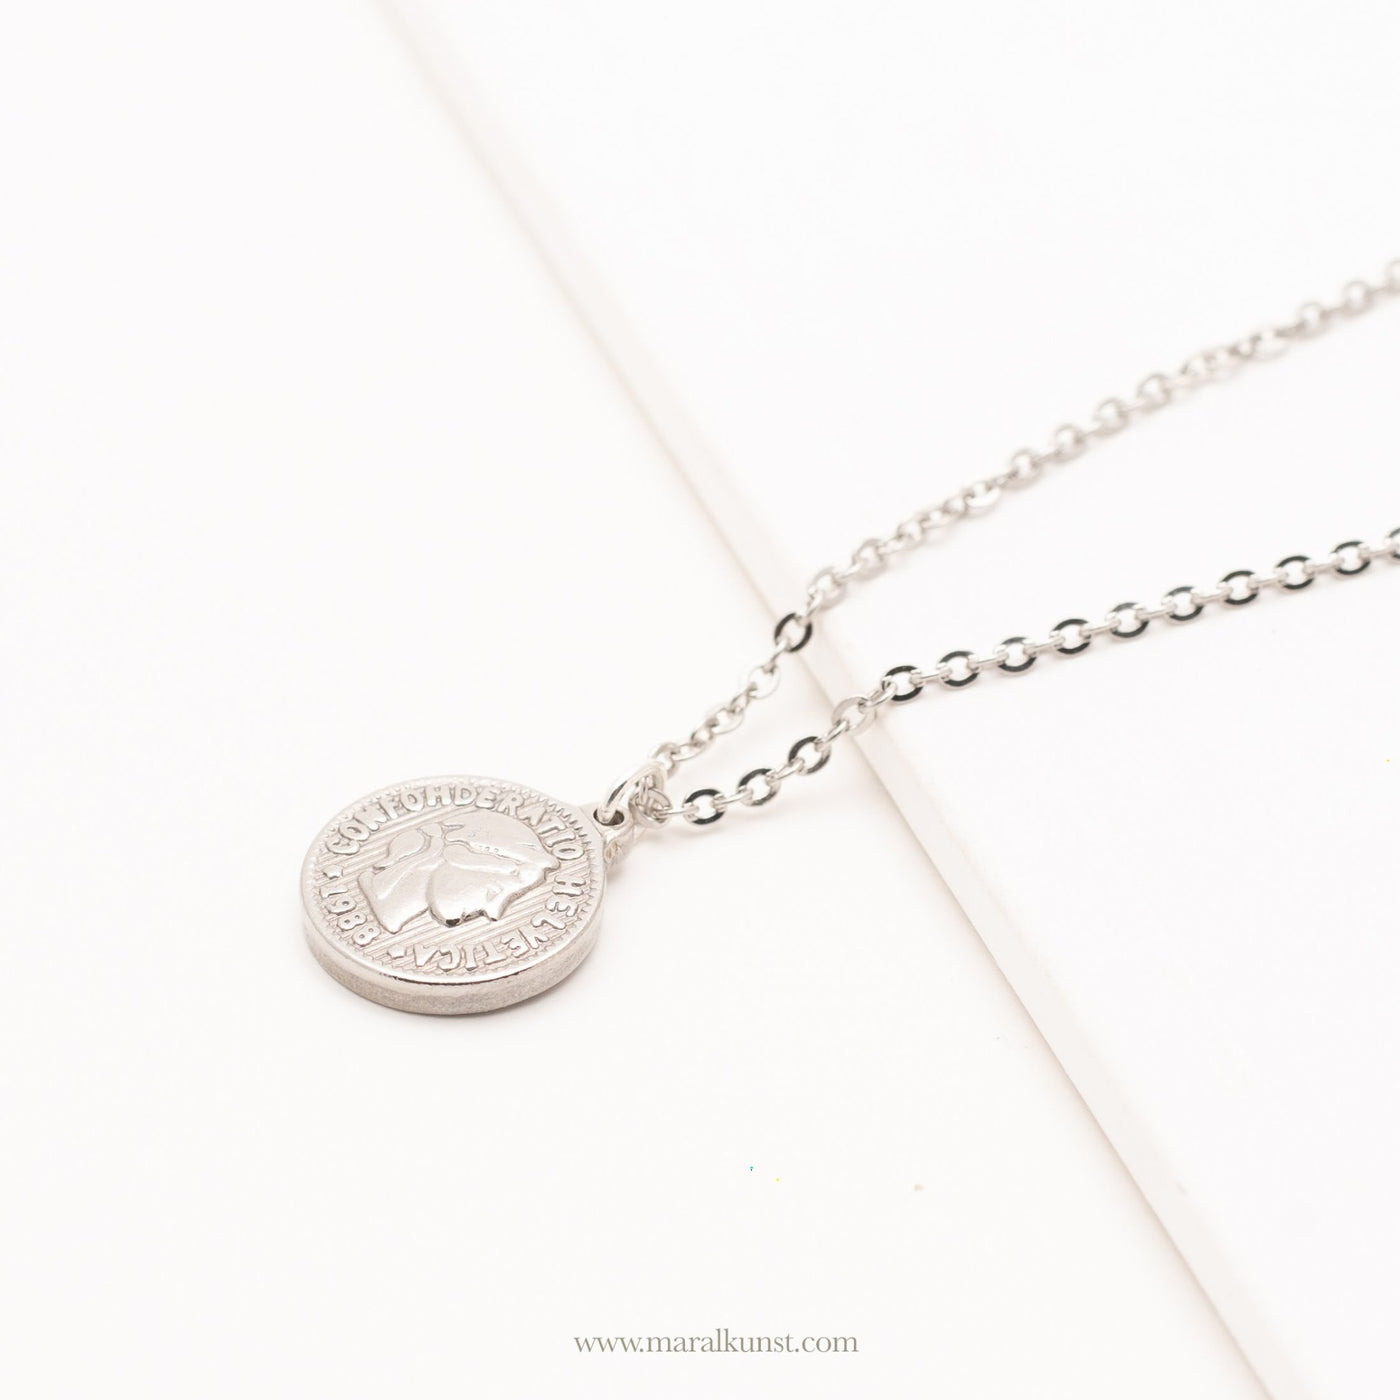 Confoederatio Helvetica Coin Necklace - Maral Kunst Jewelry